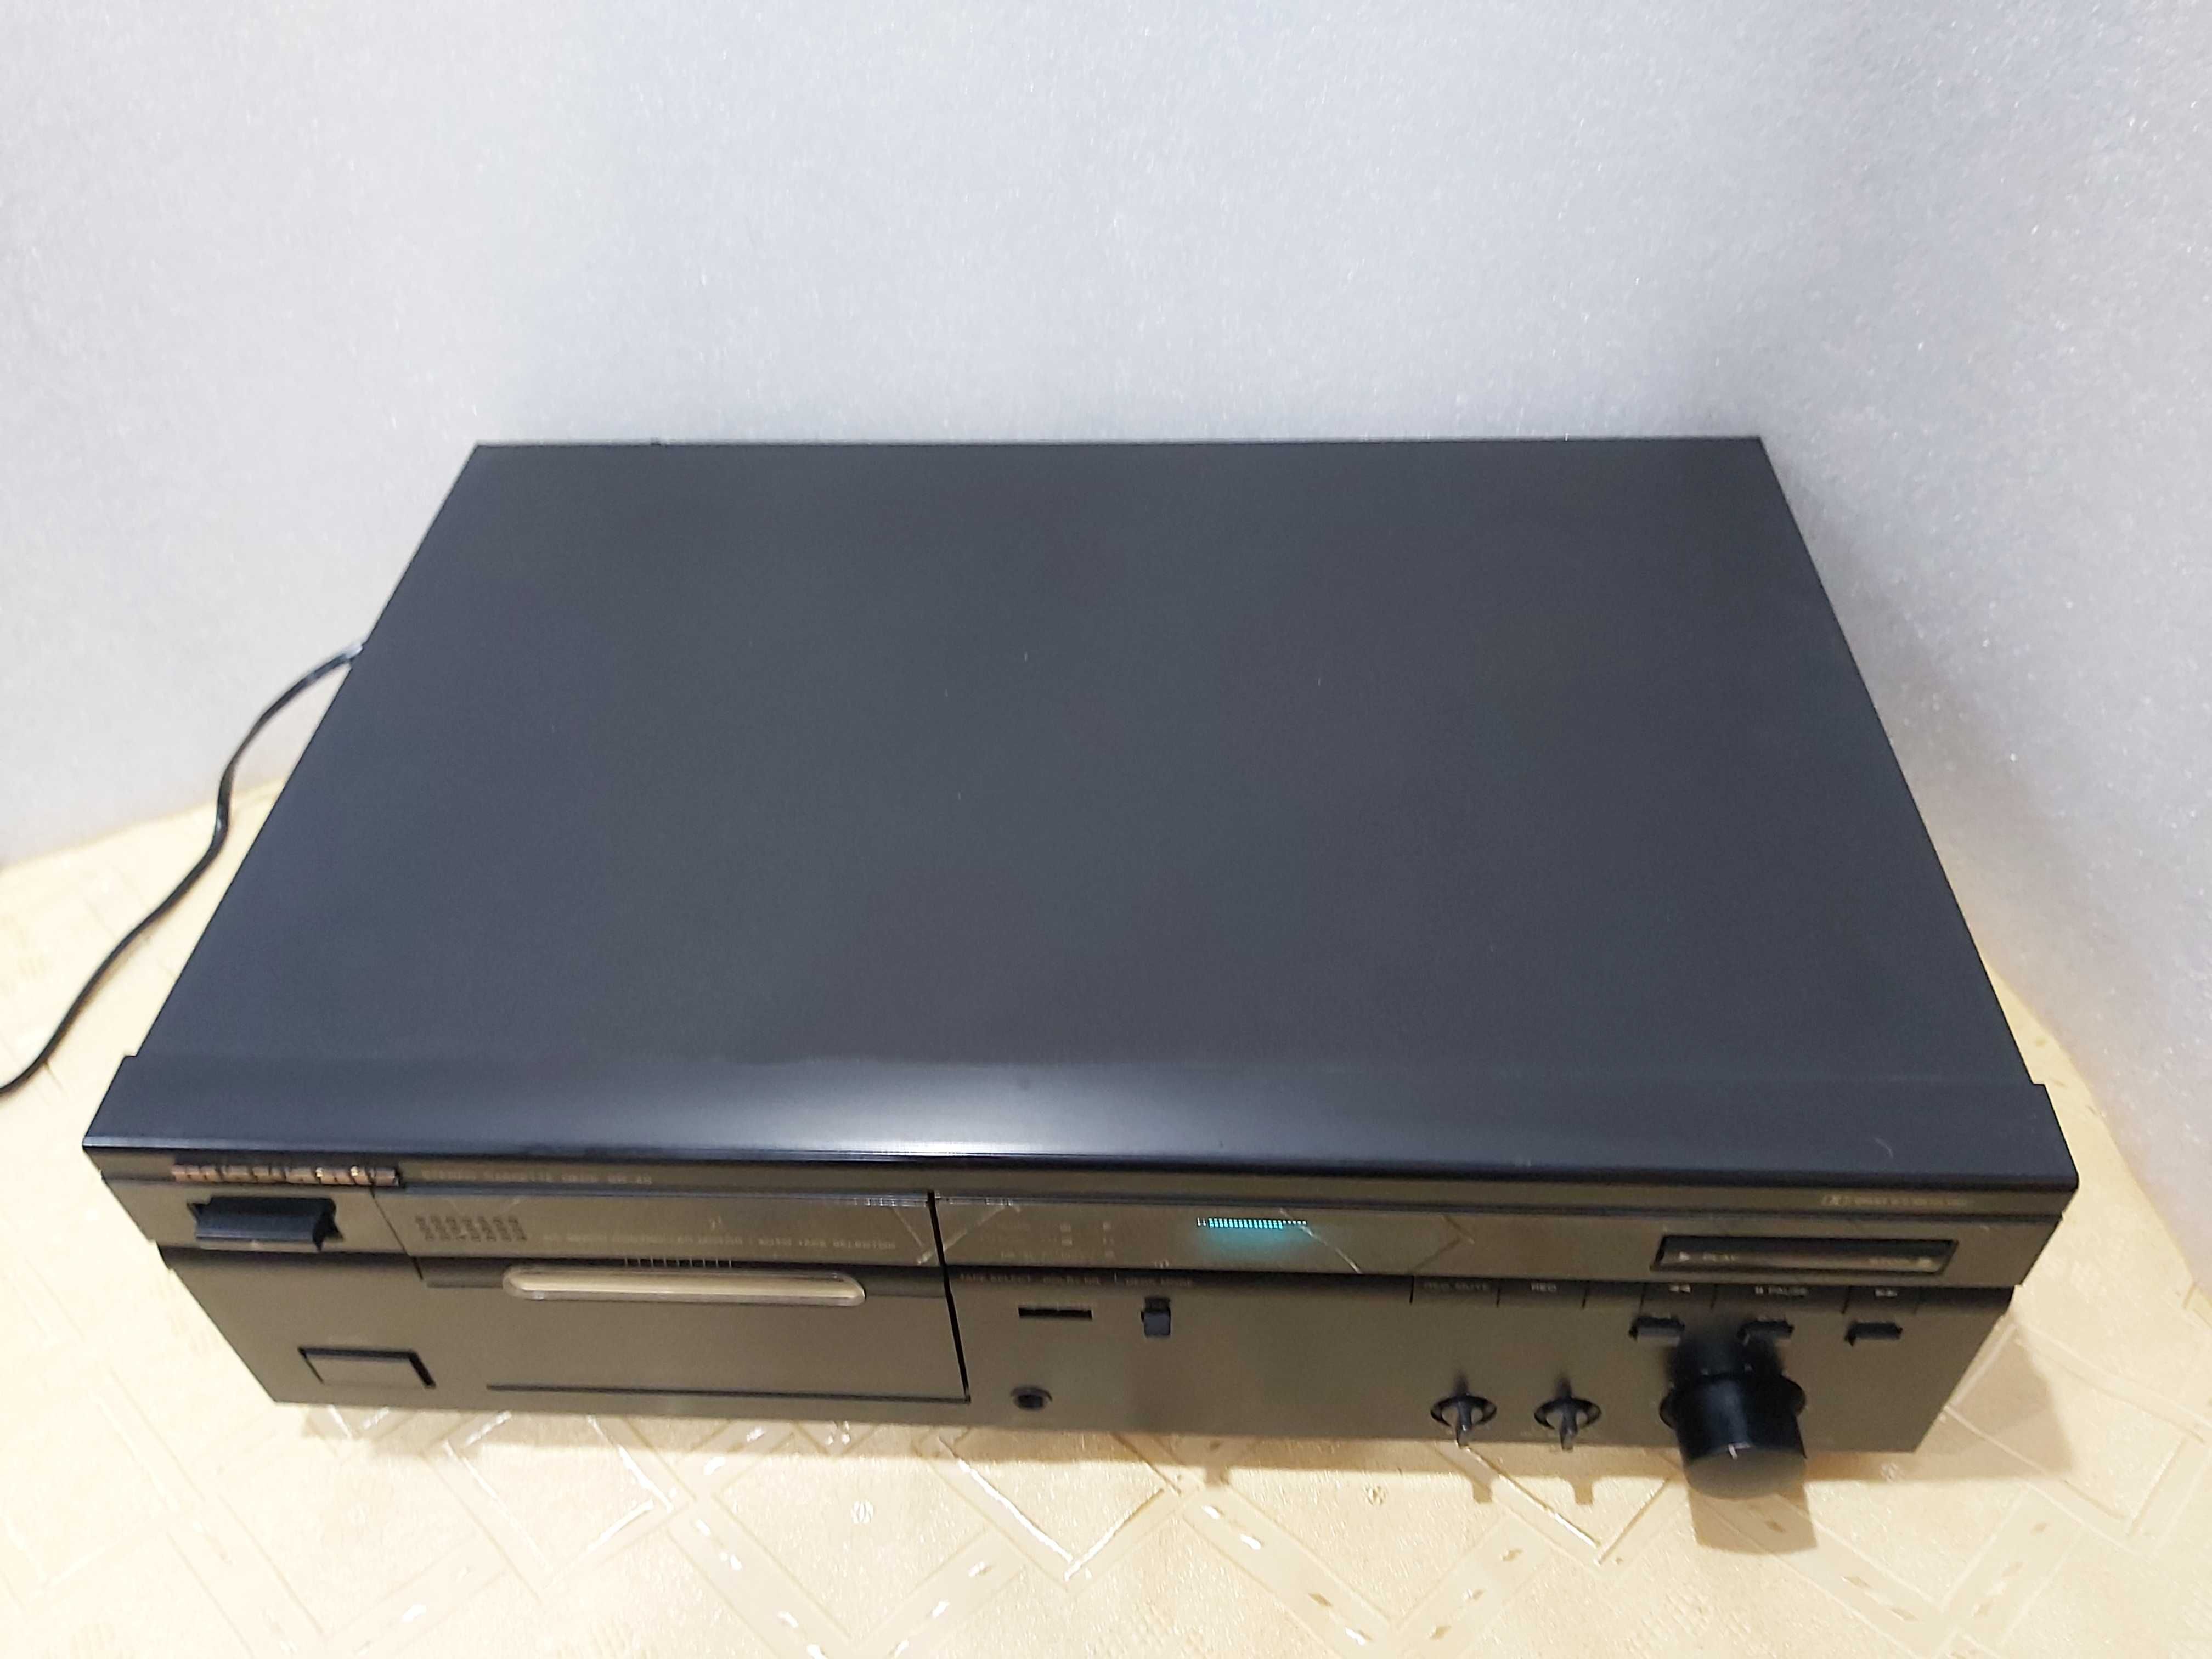 Marantz SD-40 czarny magnetofon kasetowy